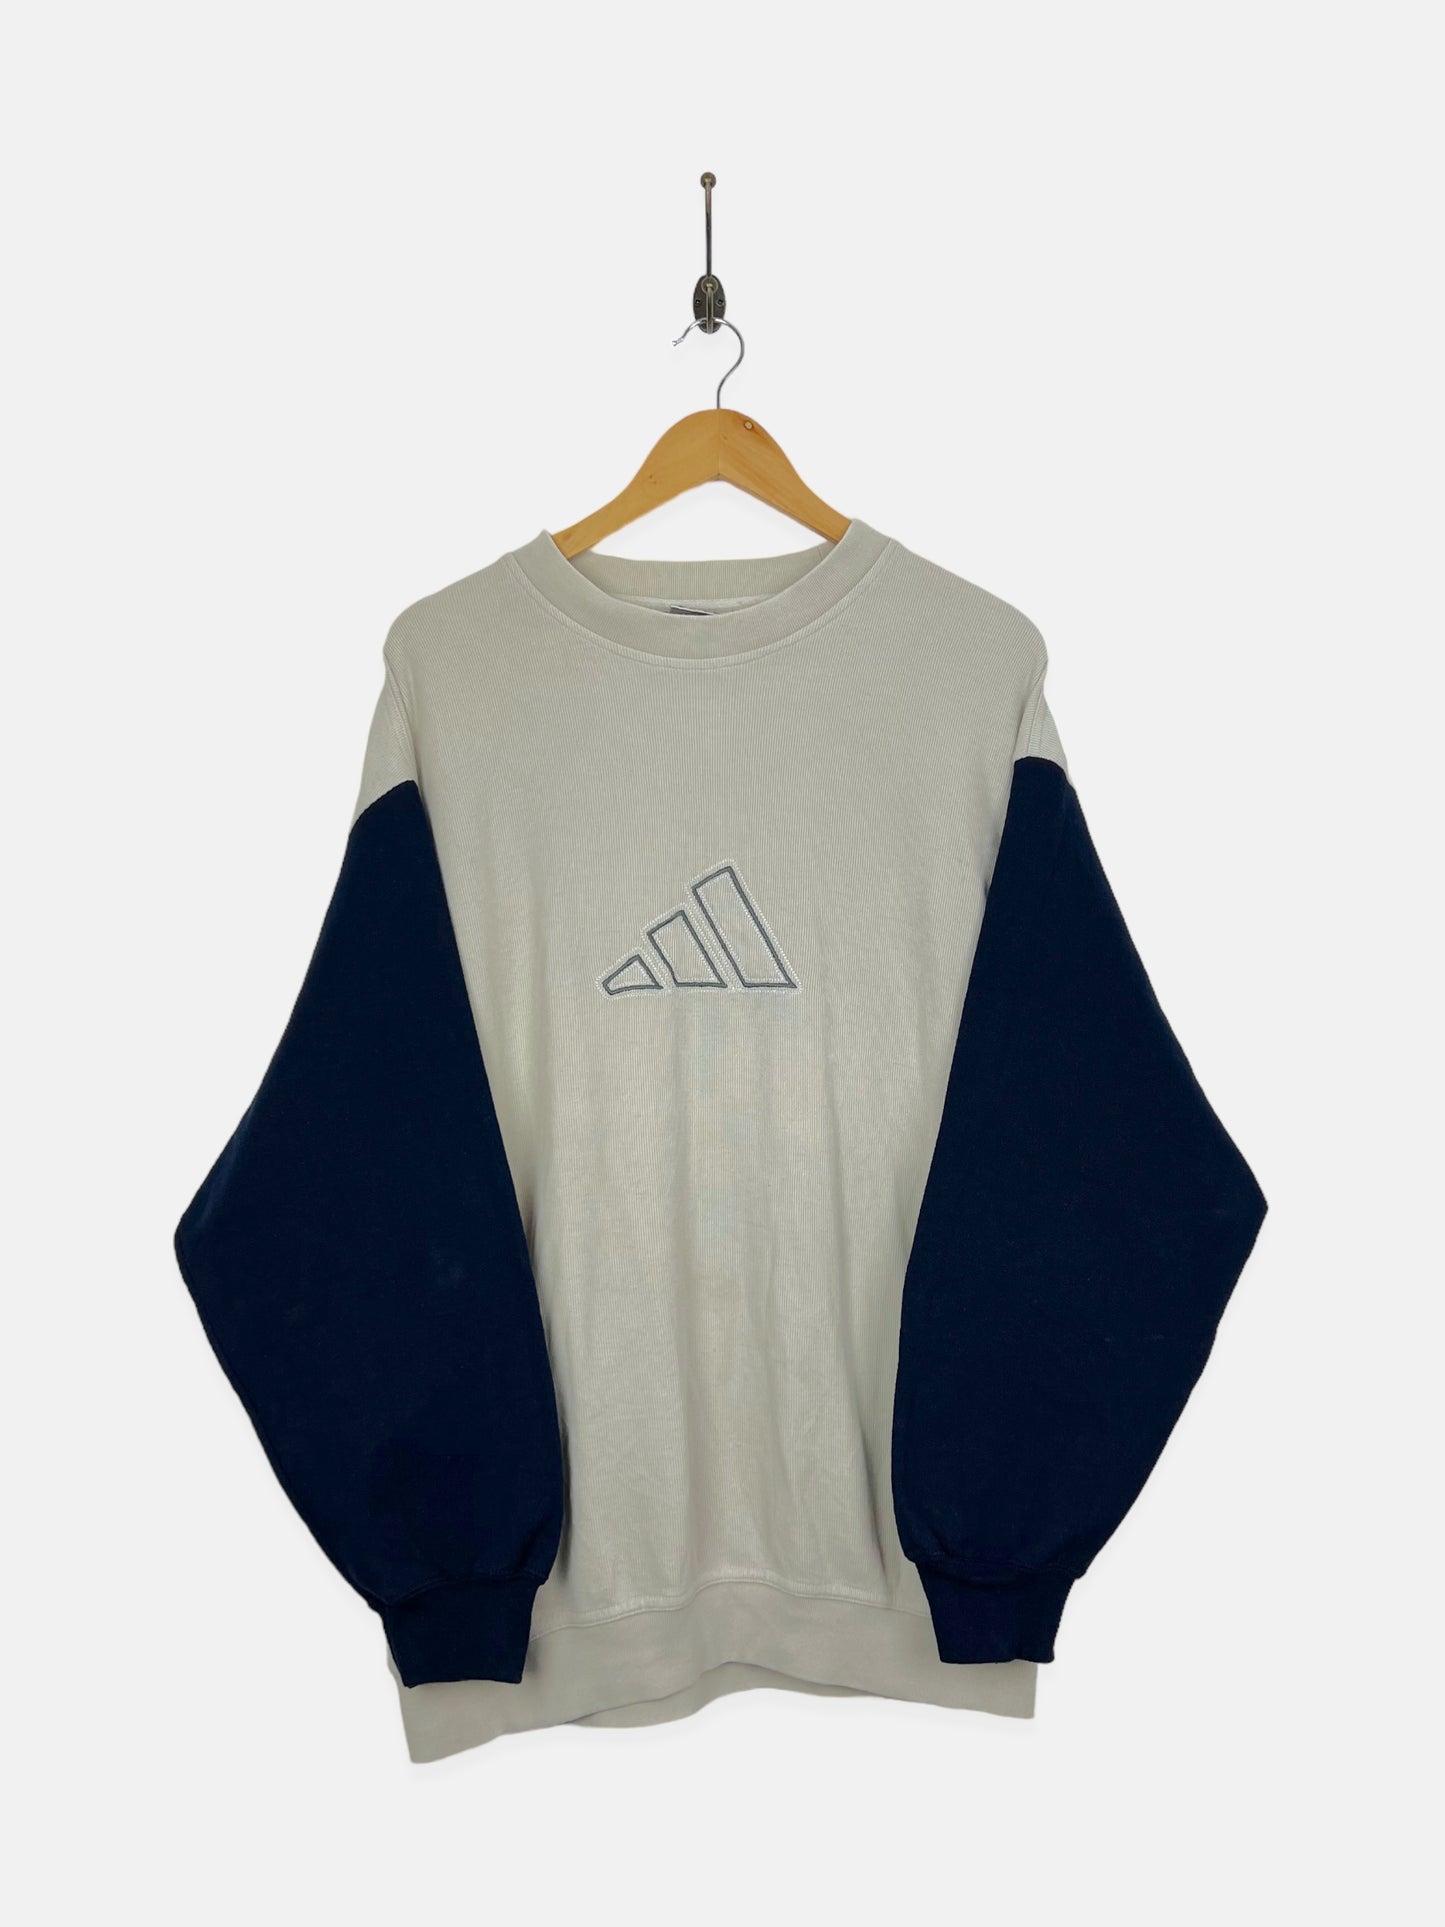 90's Adidas Embroidered Vintage Light Sweatshirt Size XL